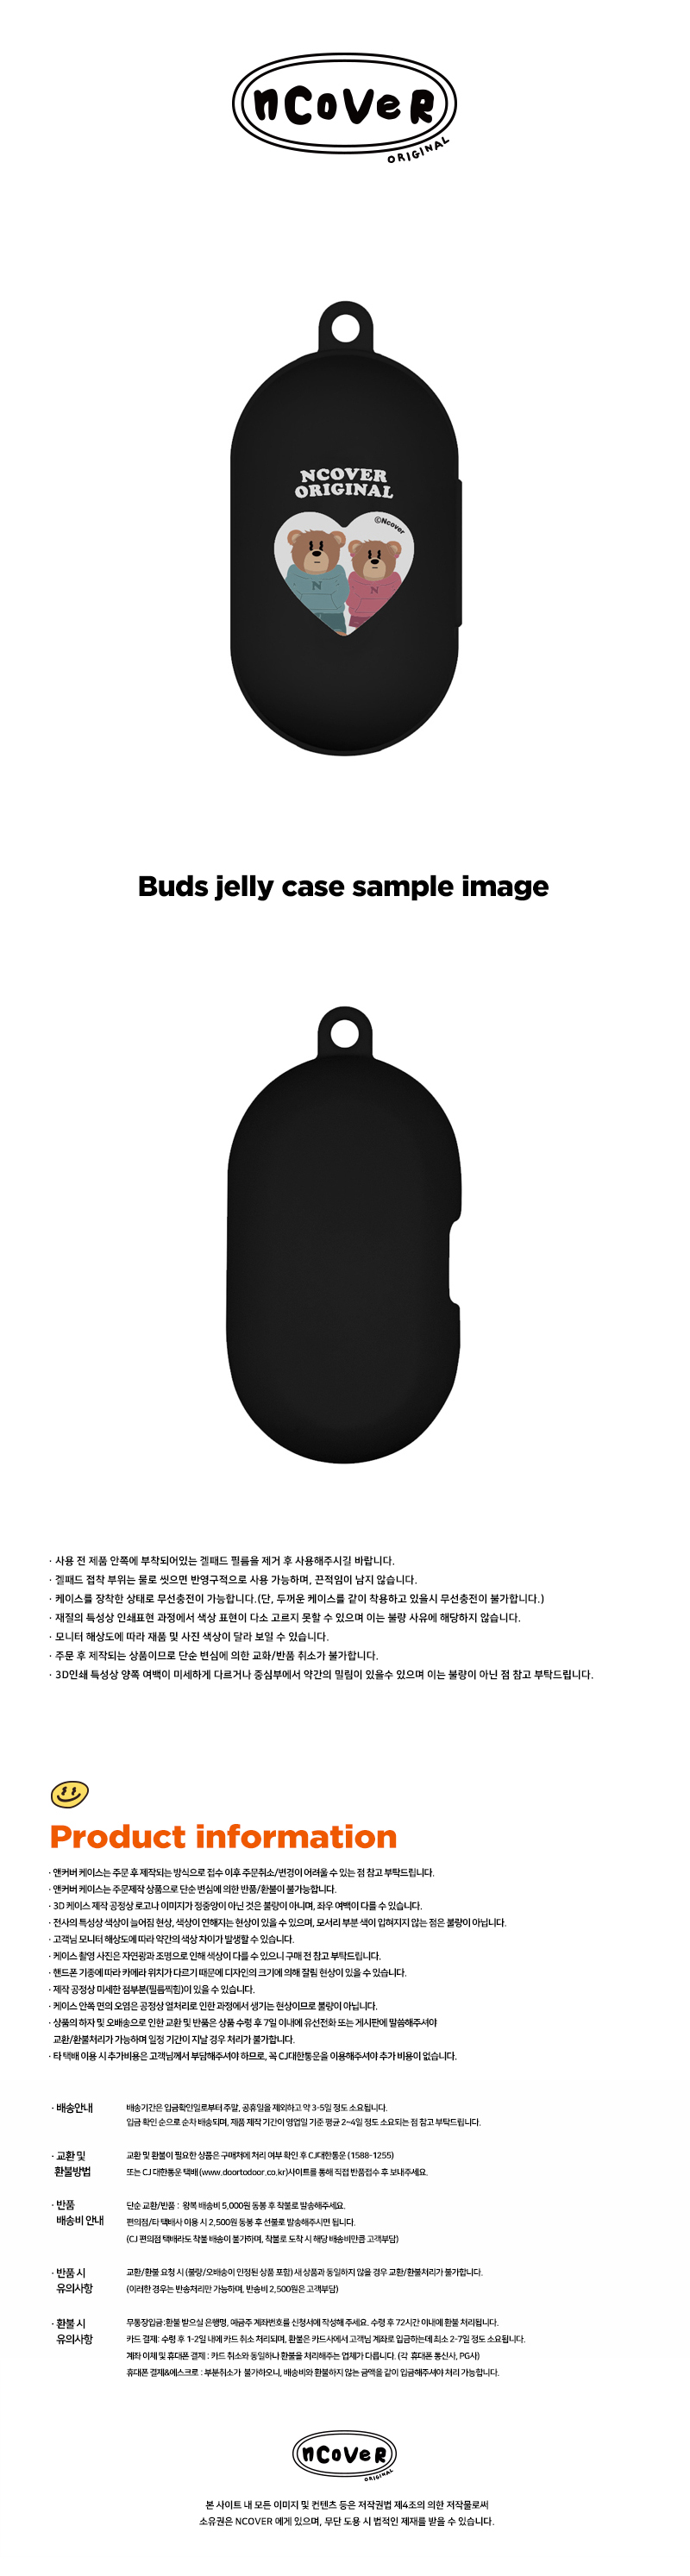  Couple hoodie bruin-black(buds jelly)  15,000원 - 바이인터내셔널주식회사 디지털, 이어폰/헤드폰, 이어폰/헤드폰 액세서리, 에어팟/에어팟프로 케이스 바보사랑  Couple hoodie bruin-black(buds jelly)  15,000원 - 바이인터내셔널주식회사 디지털, 이어폰/헤드폰, 이어폰/헤드폰 액세서리, 에어팟/에어팟프로 케이스 바보사랑